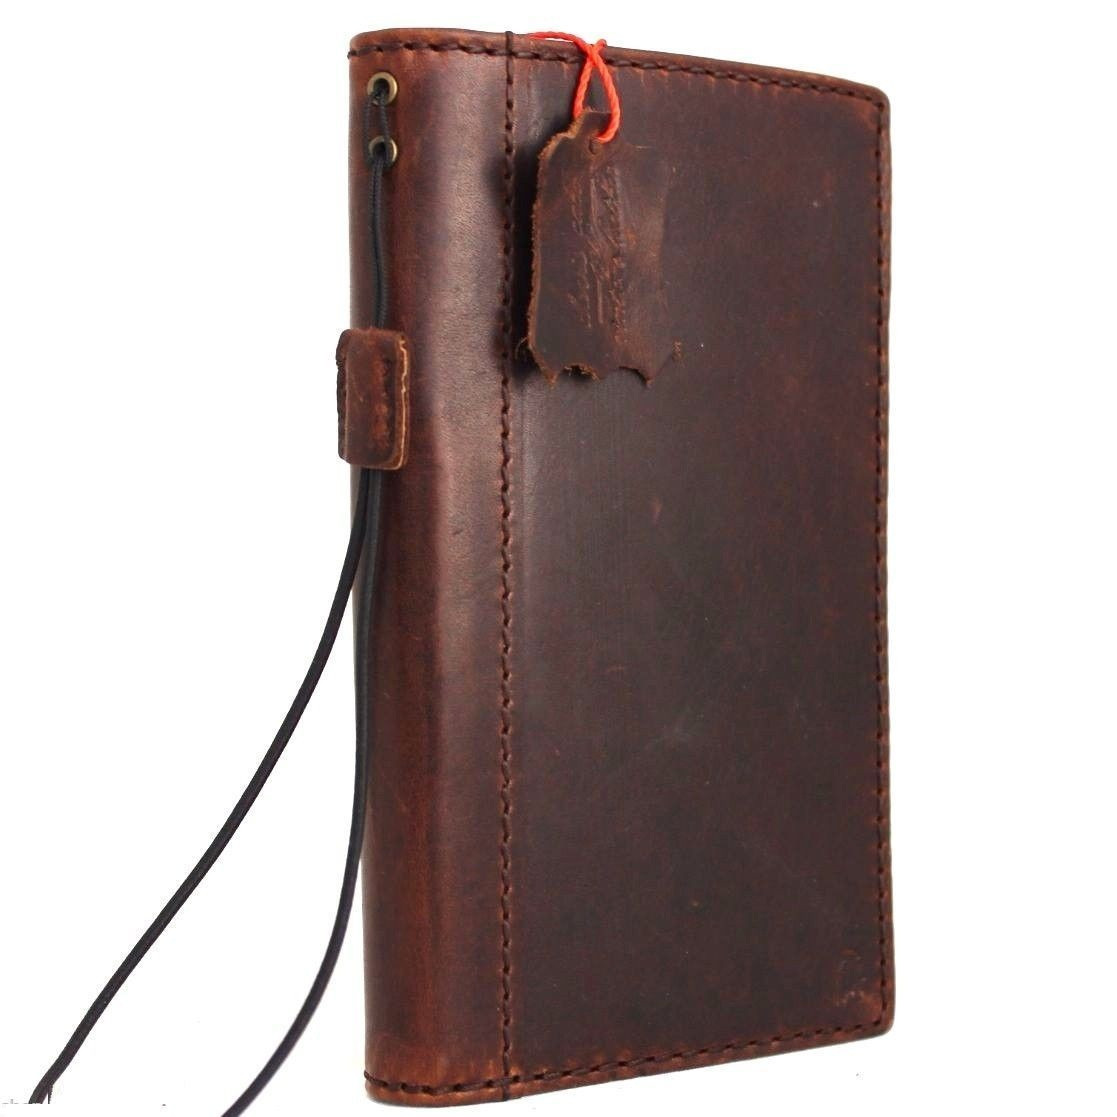 kwaadheid de vrije loop geven identificatie inflatie genuine vintage leather Case for Samsung Galaxy S6 Edge Plus book wallet  luxury cover 6 slim s IL - Shop-Leather